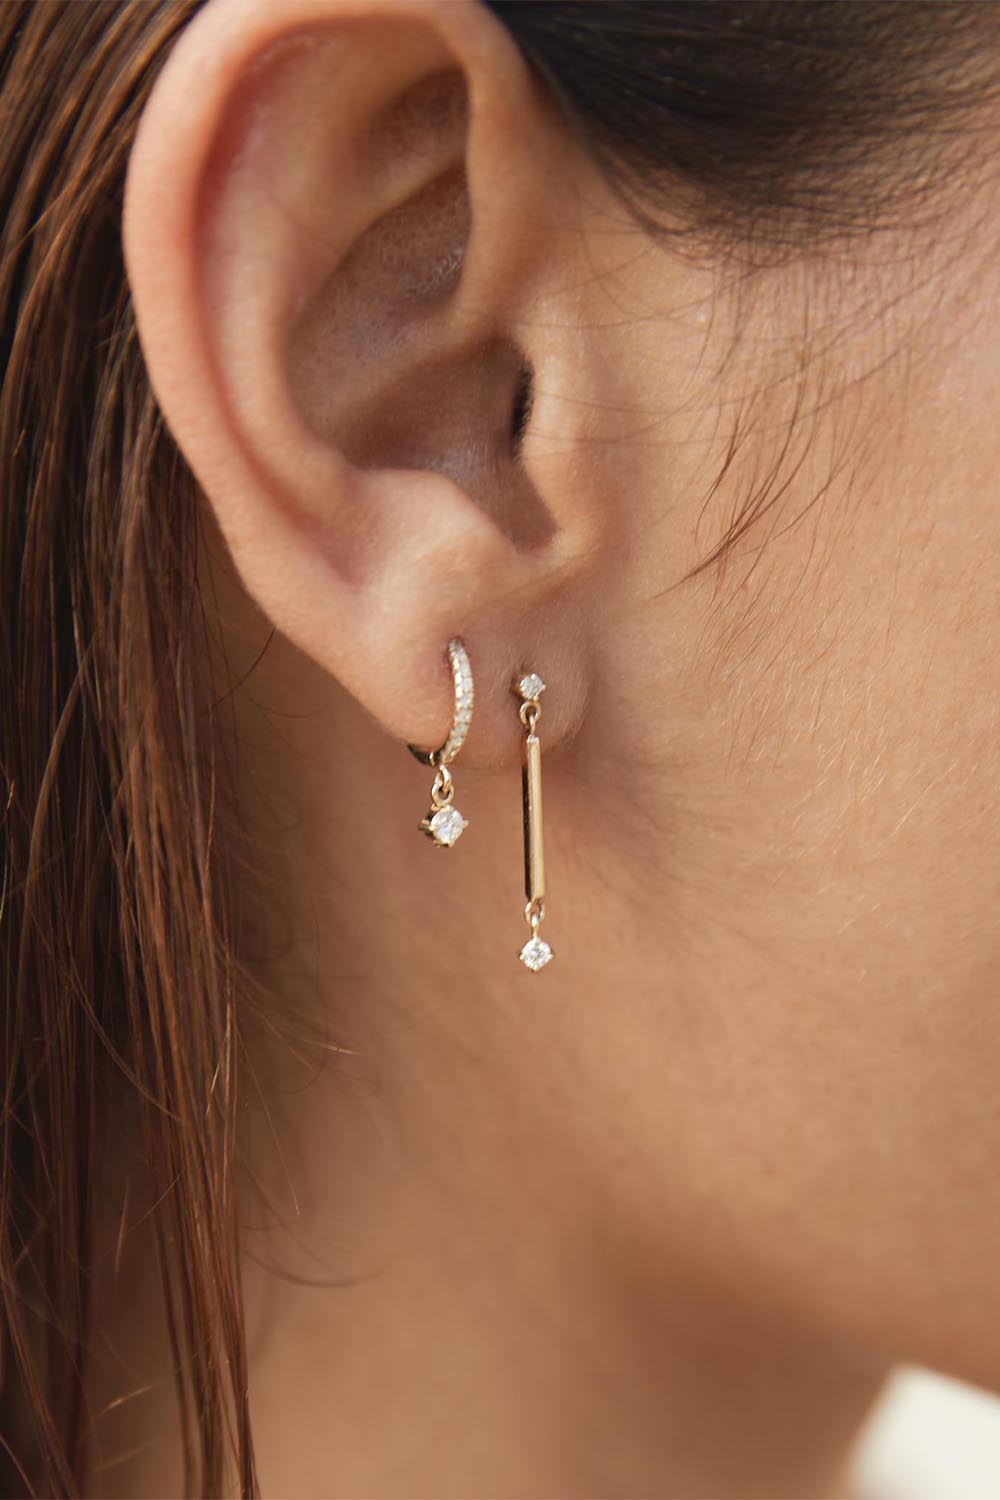 ZOE CHICCO-Two Prong Diamond Drop Earrings-YELLOW GOLD